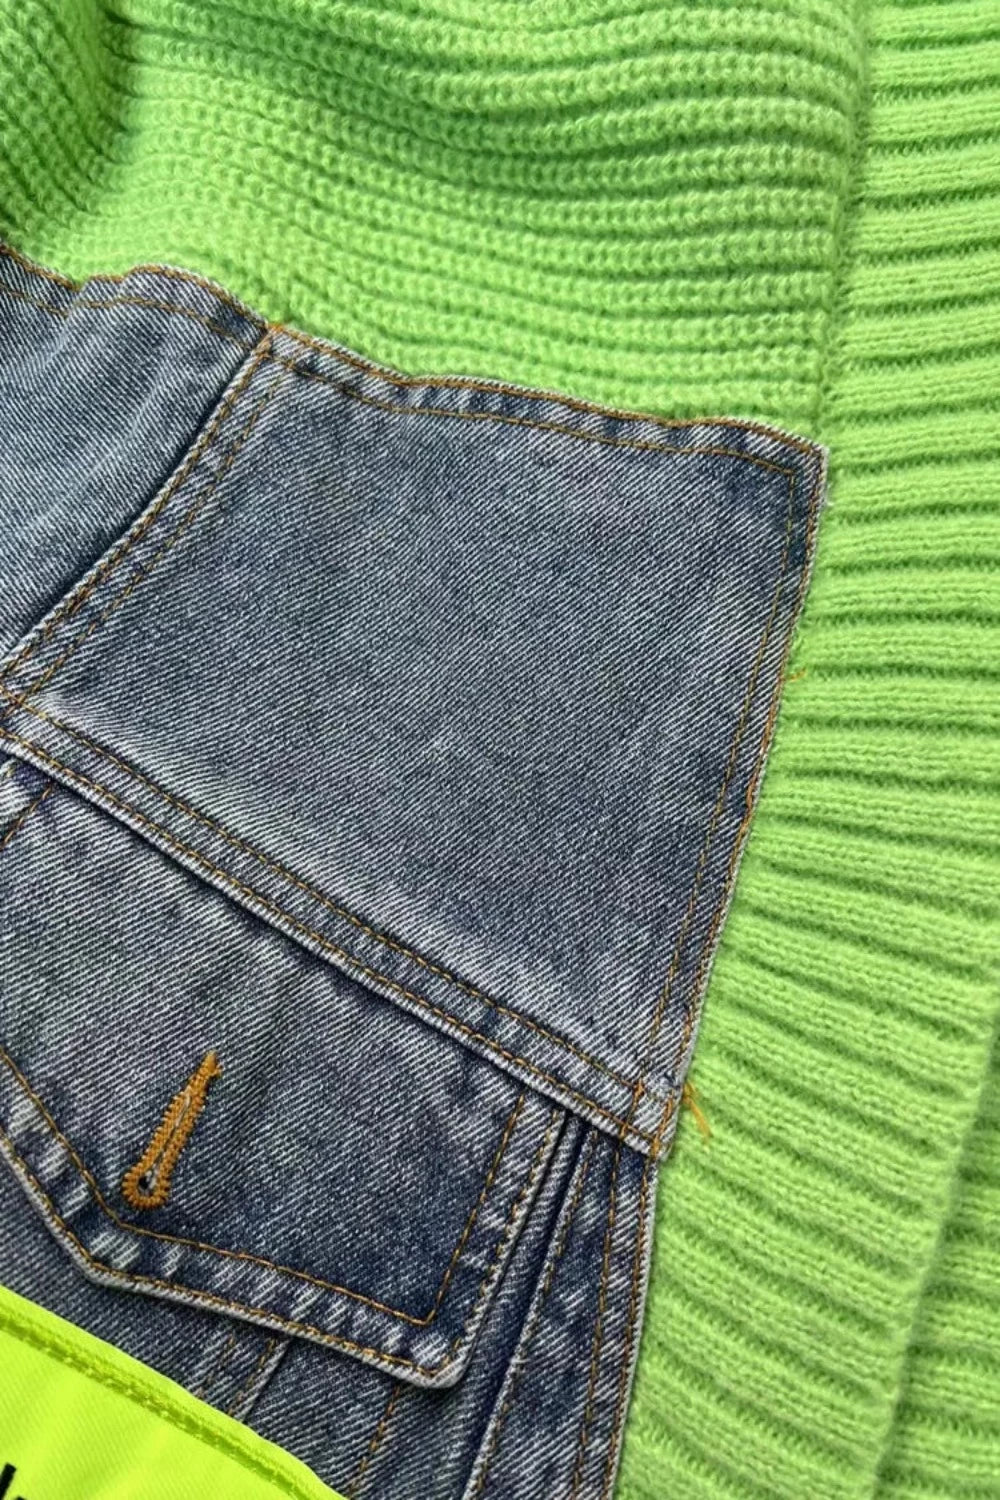 Joskaa Denim Patchwork Knit Sweater Cardigans (Hat Sold Separately)